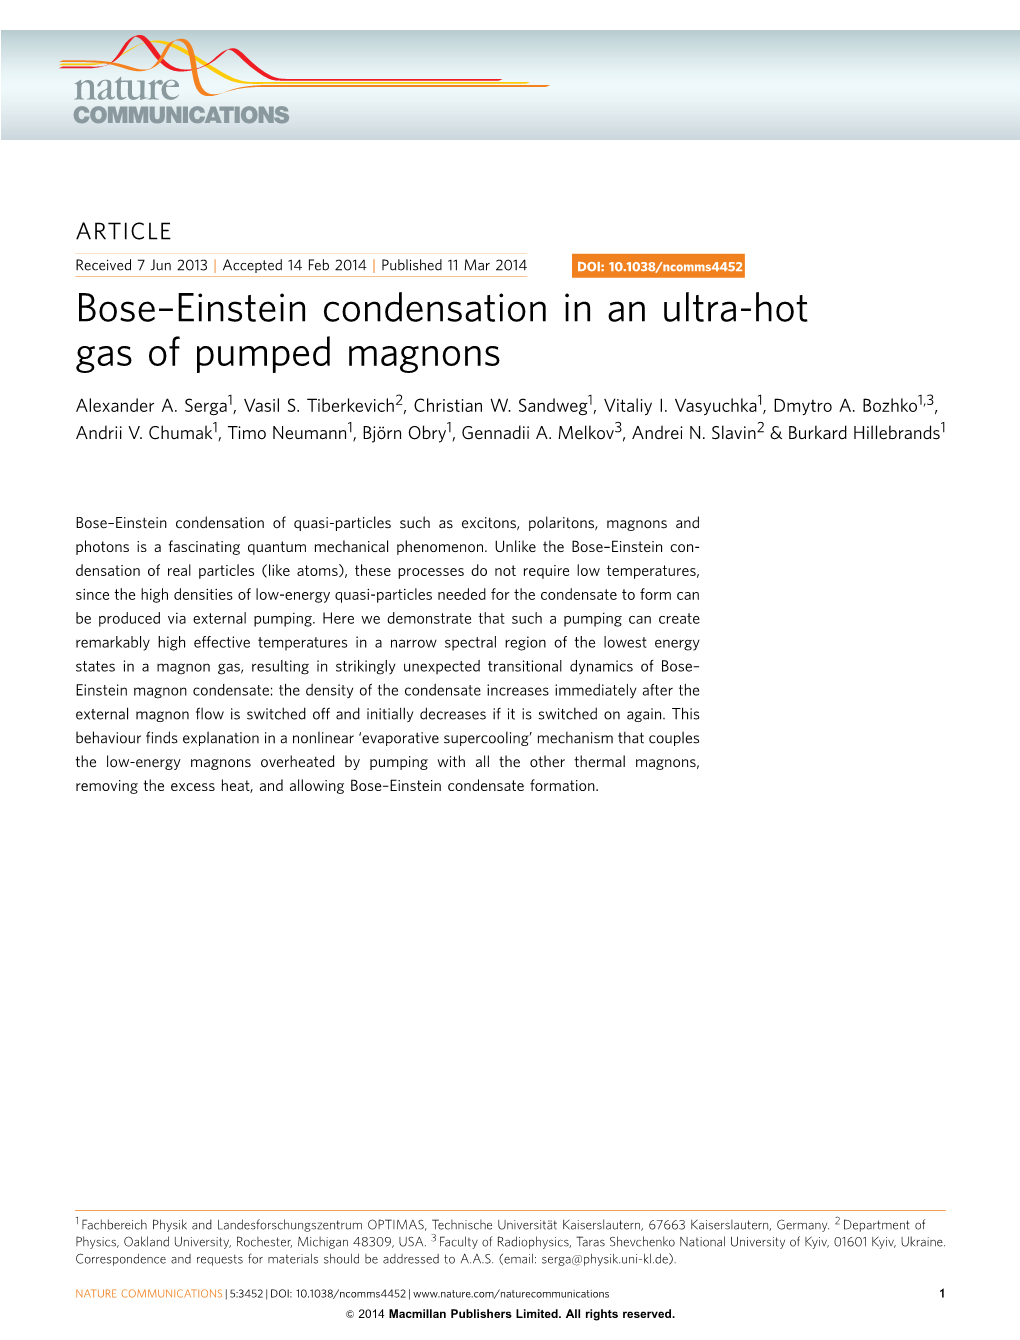 Einstein Condensation in an Ultra-Hot Gas of Pumped Magnons